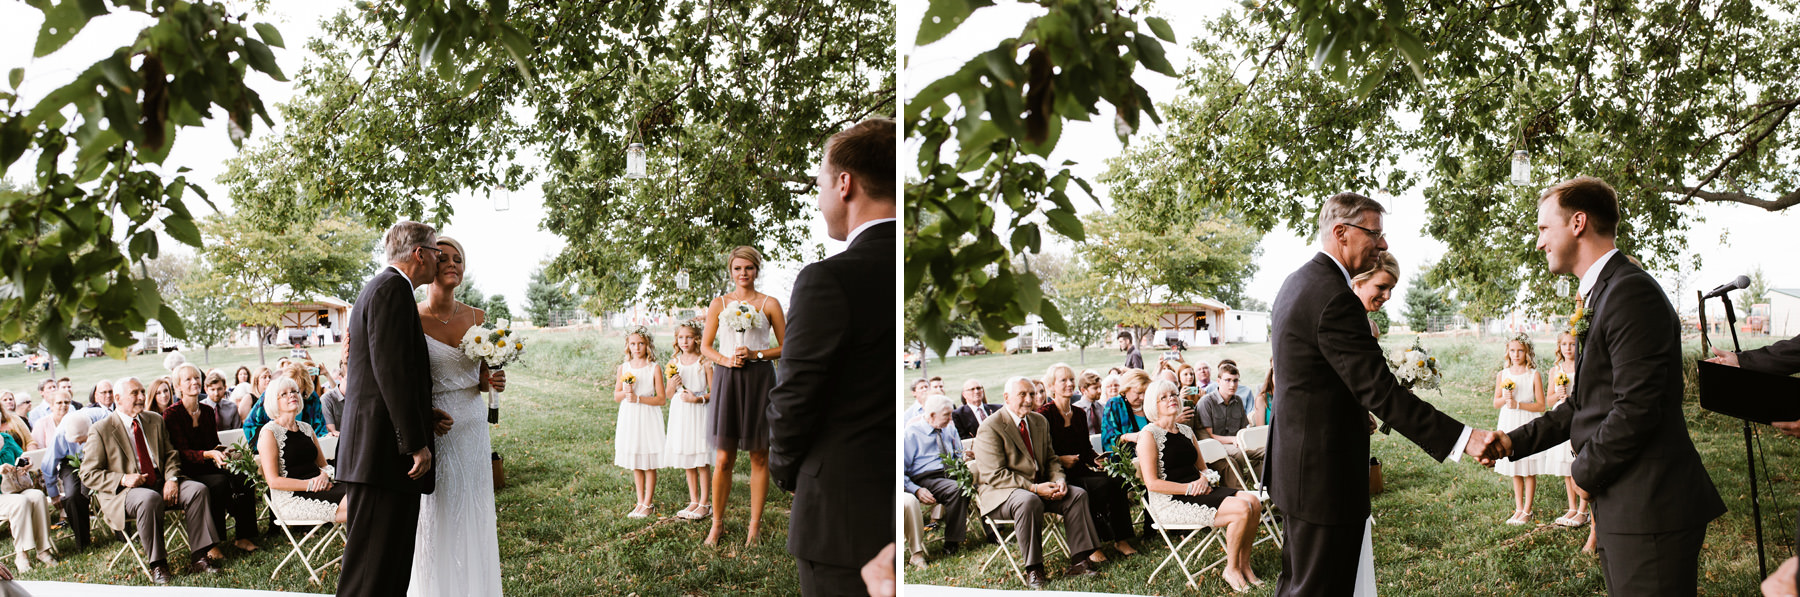 Alldredge Orchard Kansas City_Kindling Wedding Photography BLOG 42.JPG